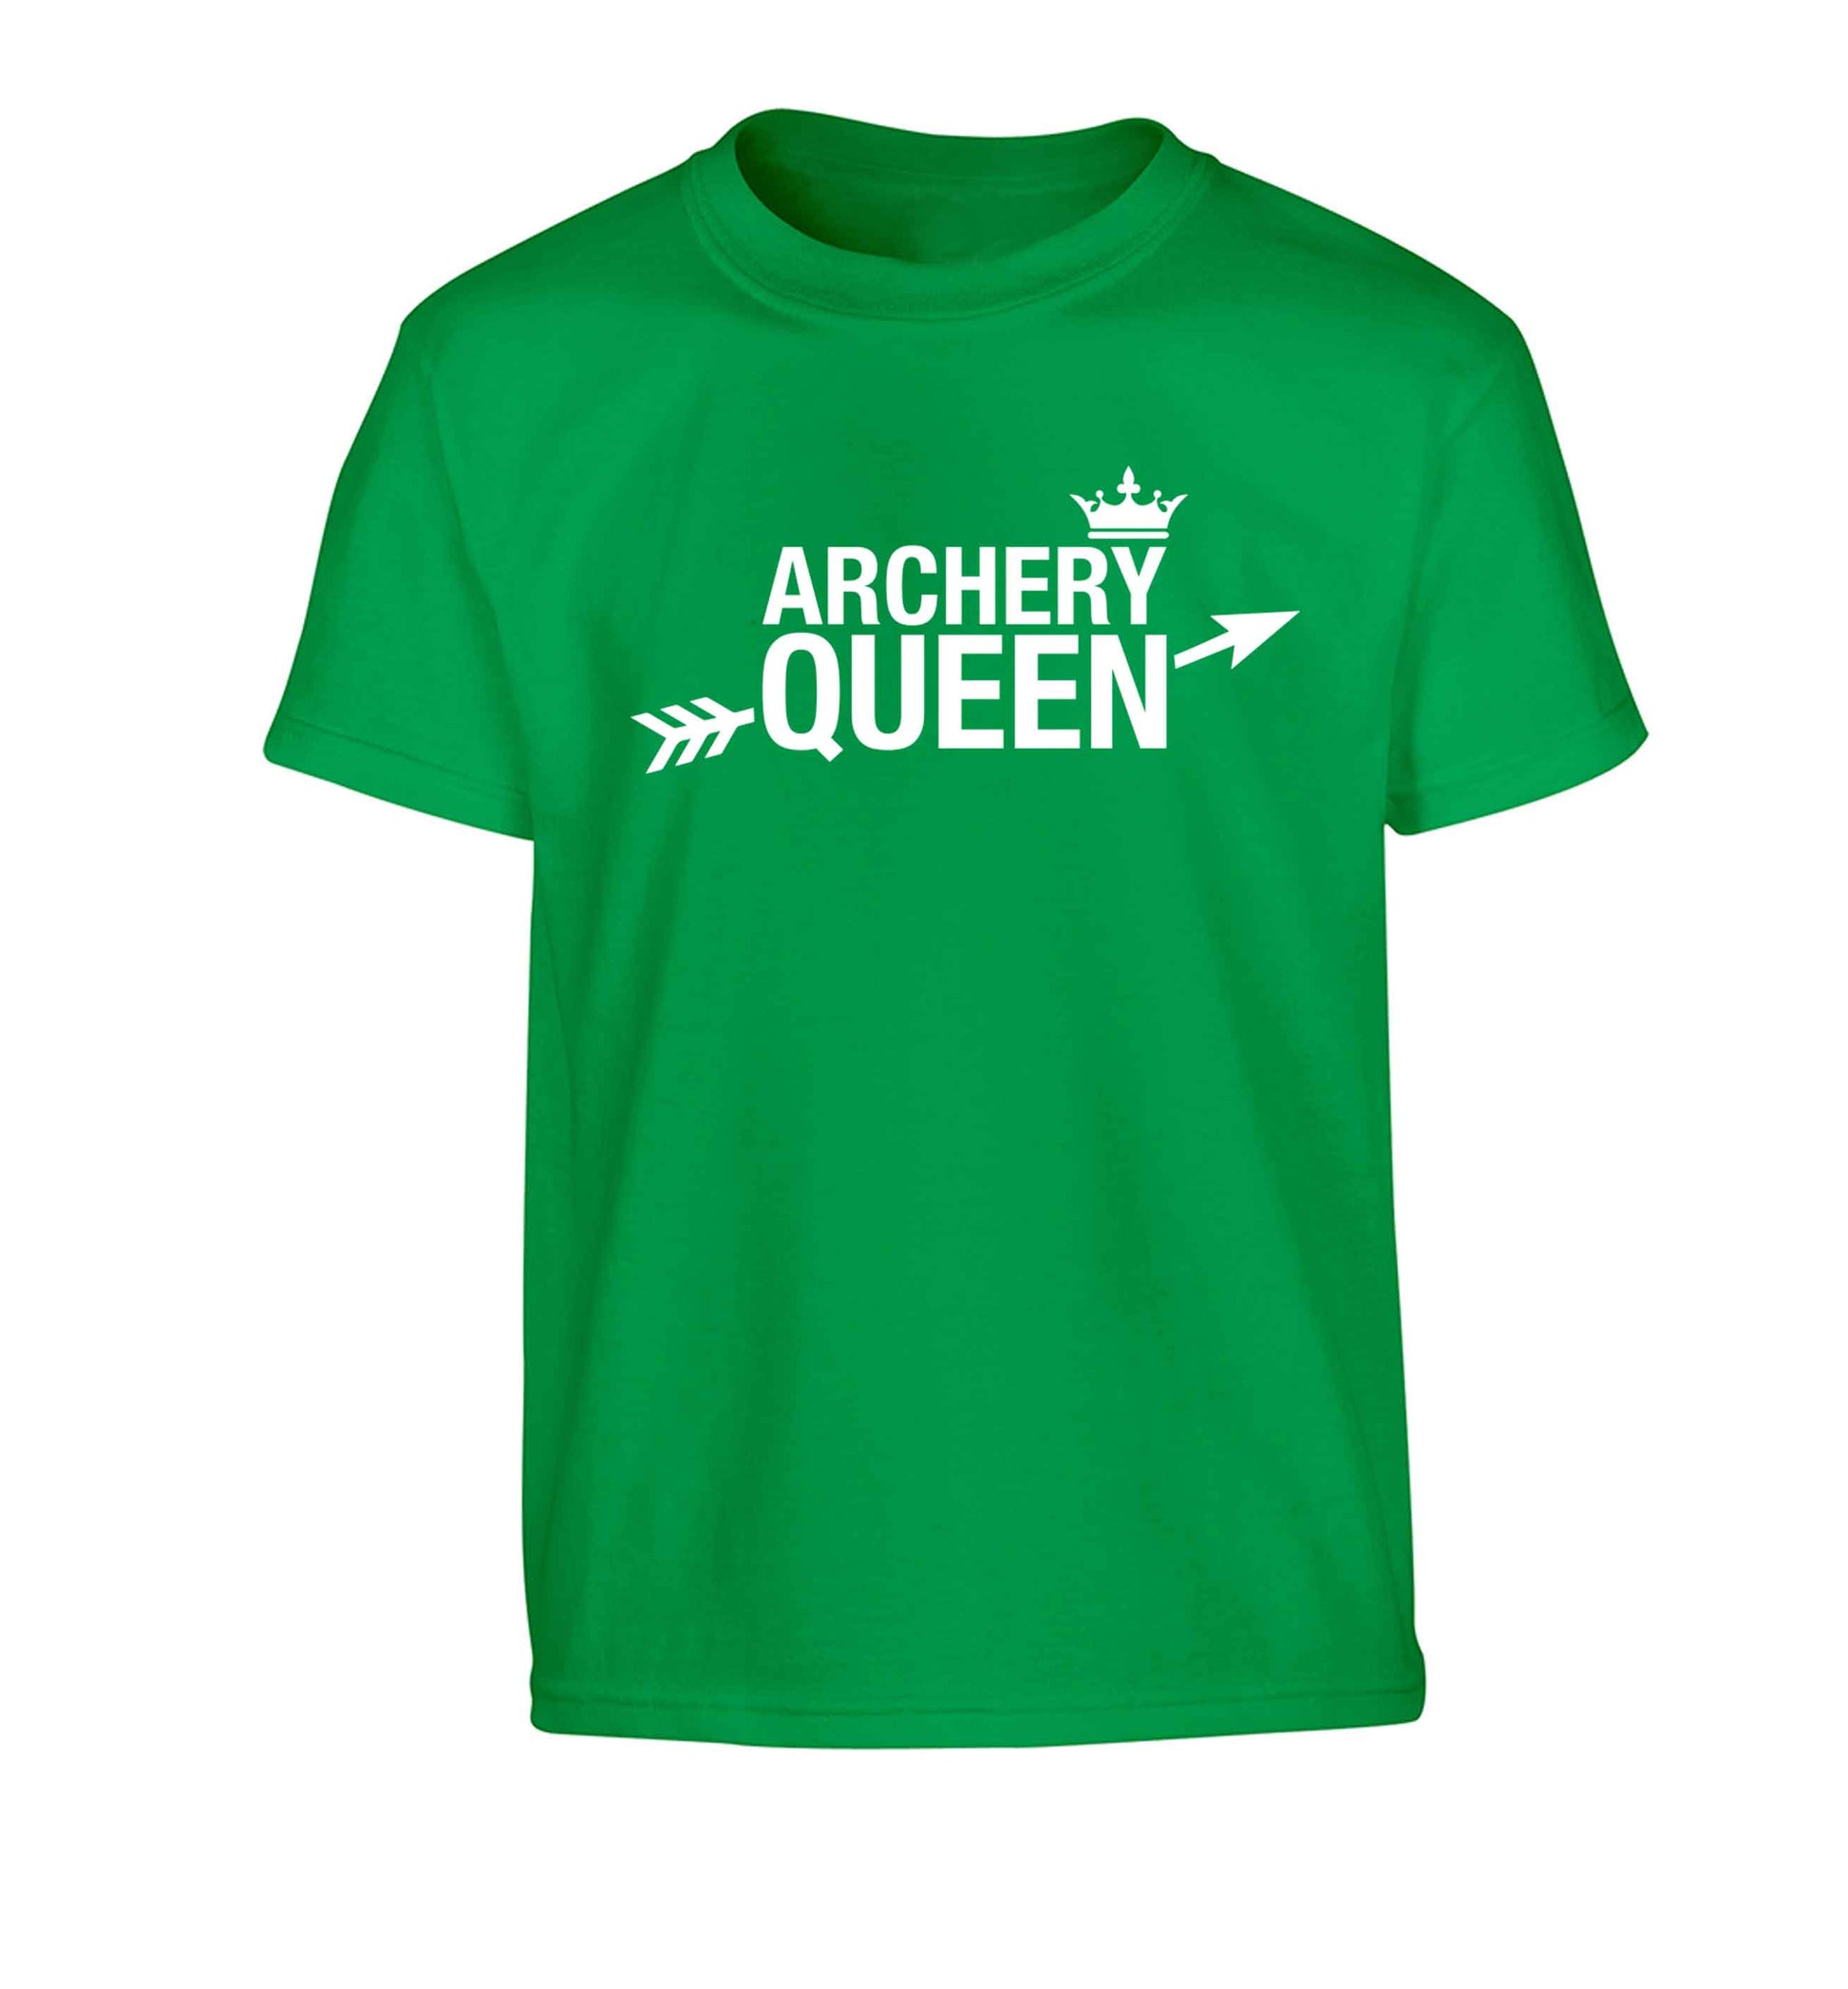 Archery queen Children's green Tshirt 12-13 Years